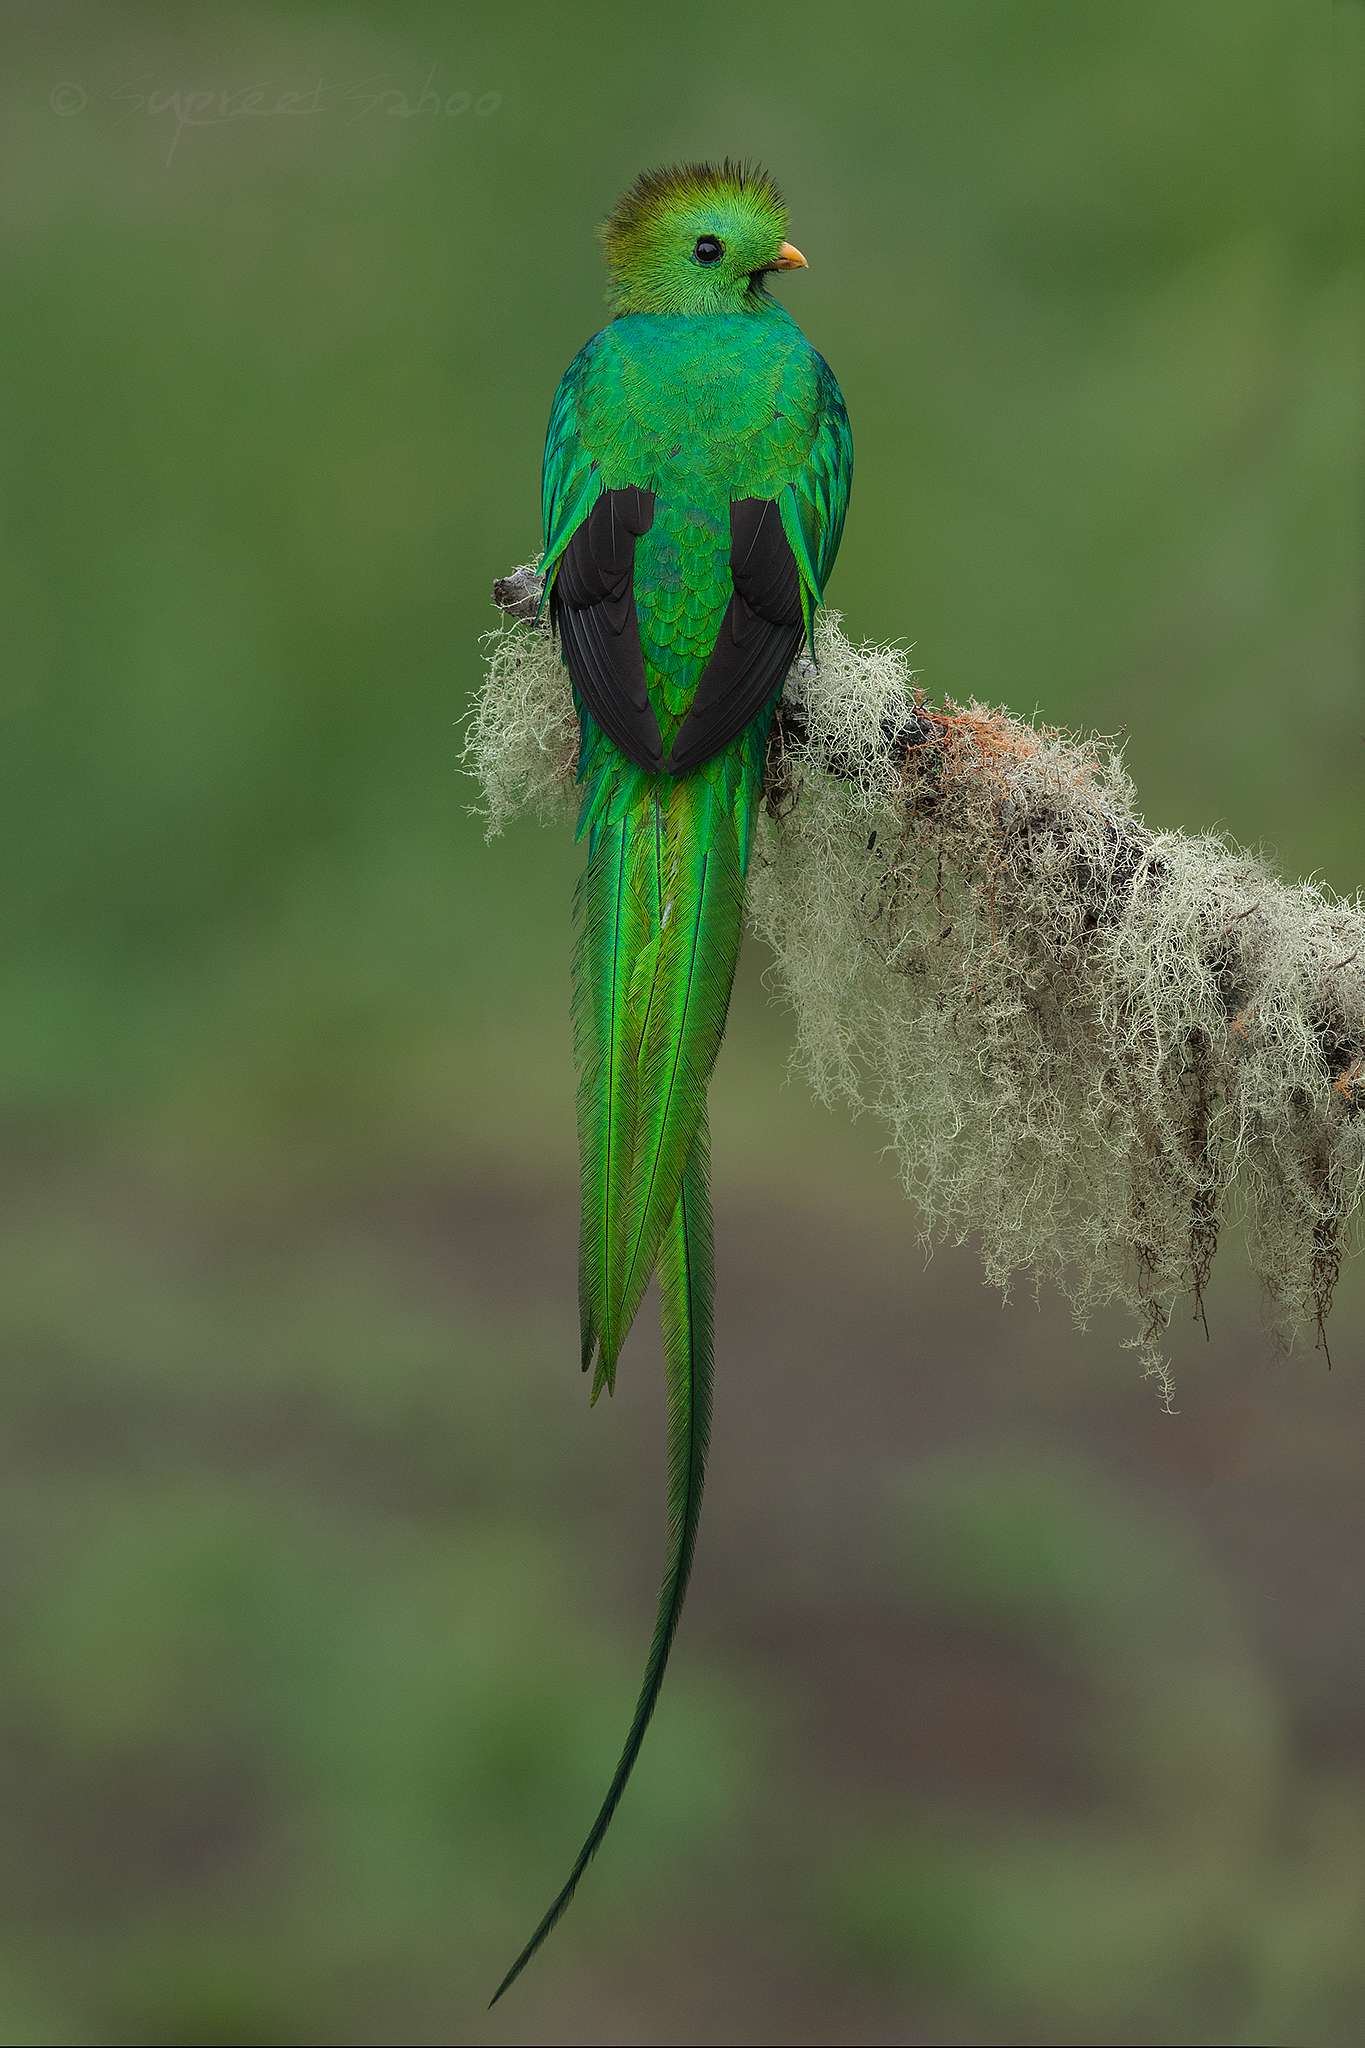 Resplendent Quetzal OMG how beautiful is this bird?